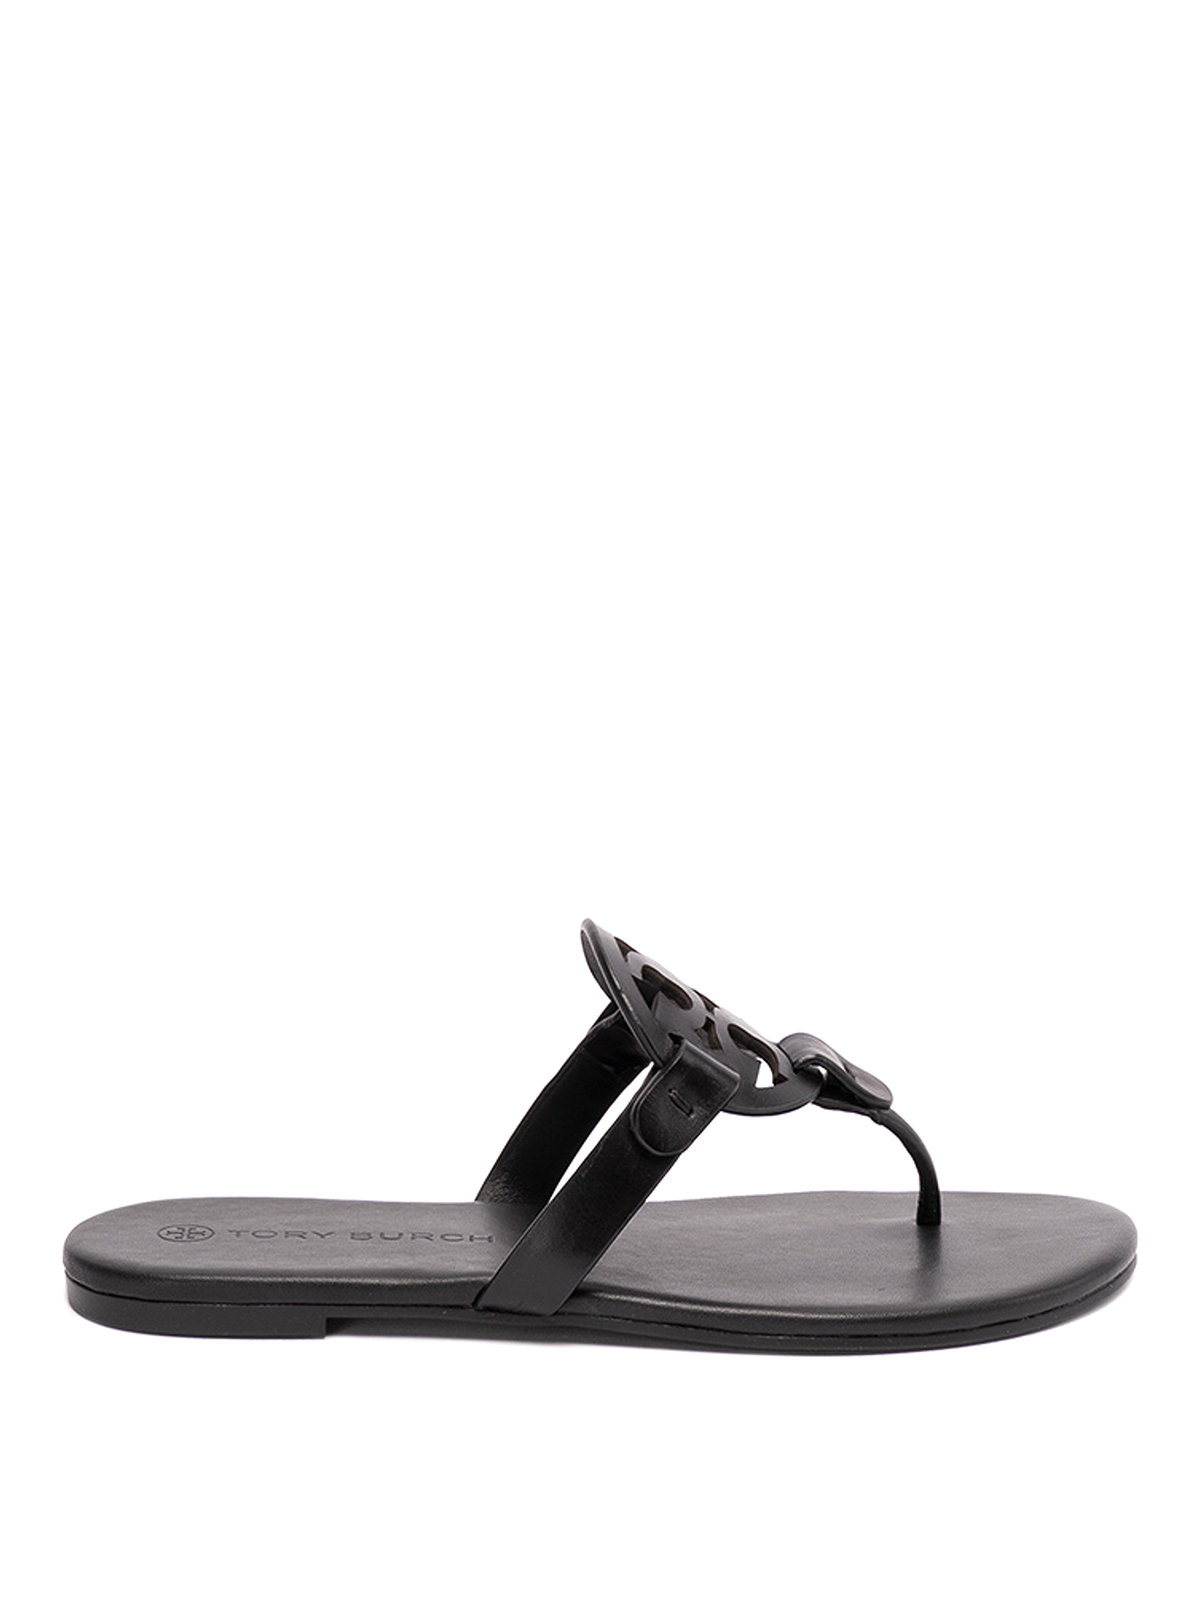 Sandals Tory Burch - Miller flat sandals - 90582006 | Shop online at iKRIX